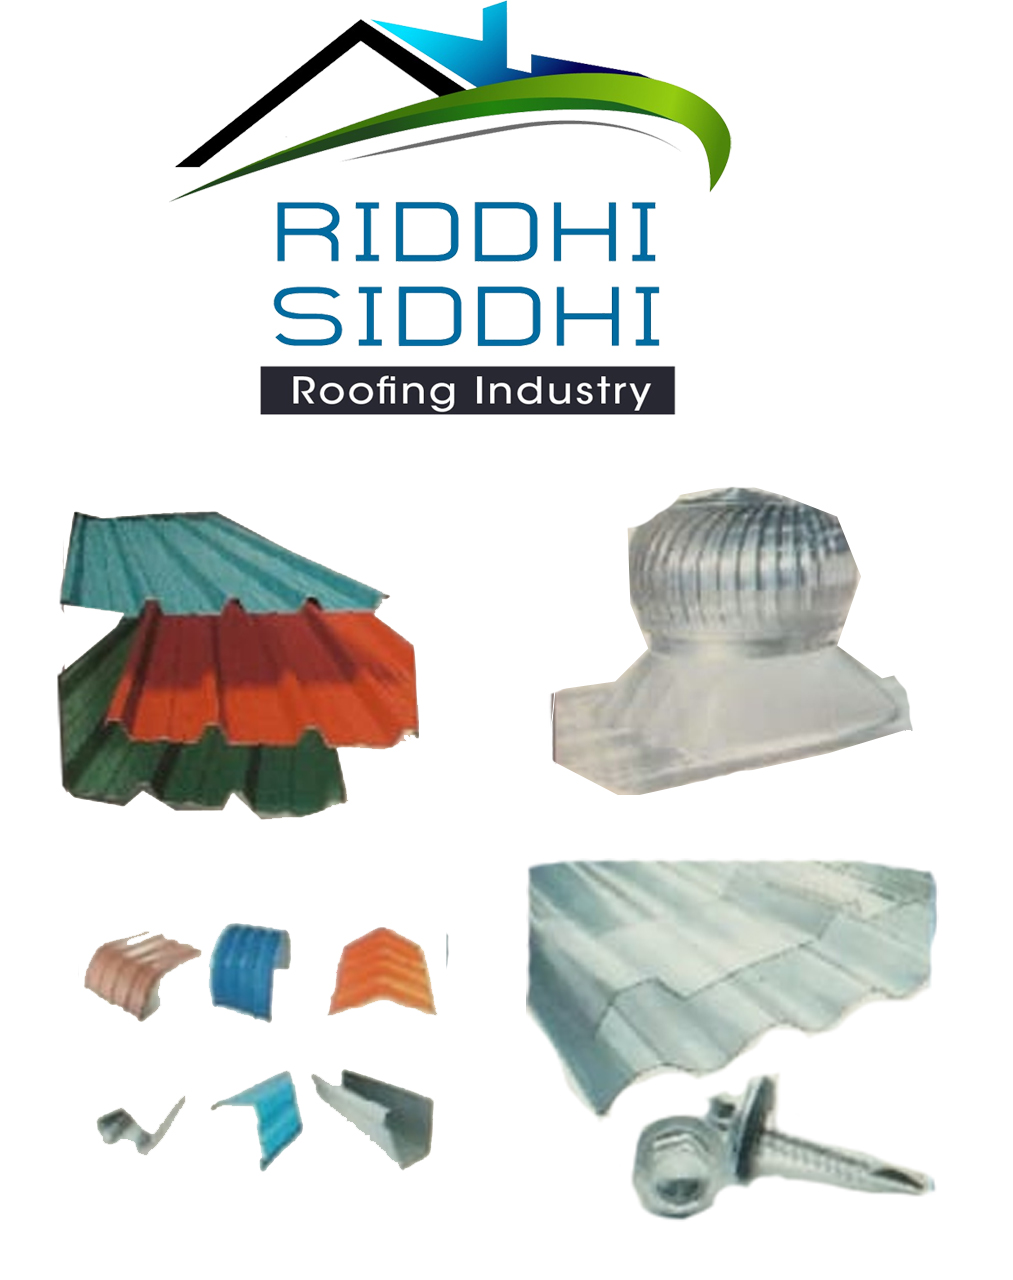 RIDDHI SIDDHI ROOFING INDUSTRY| SolapurMall.com